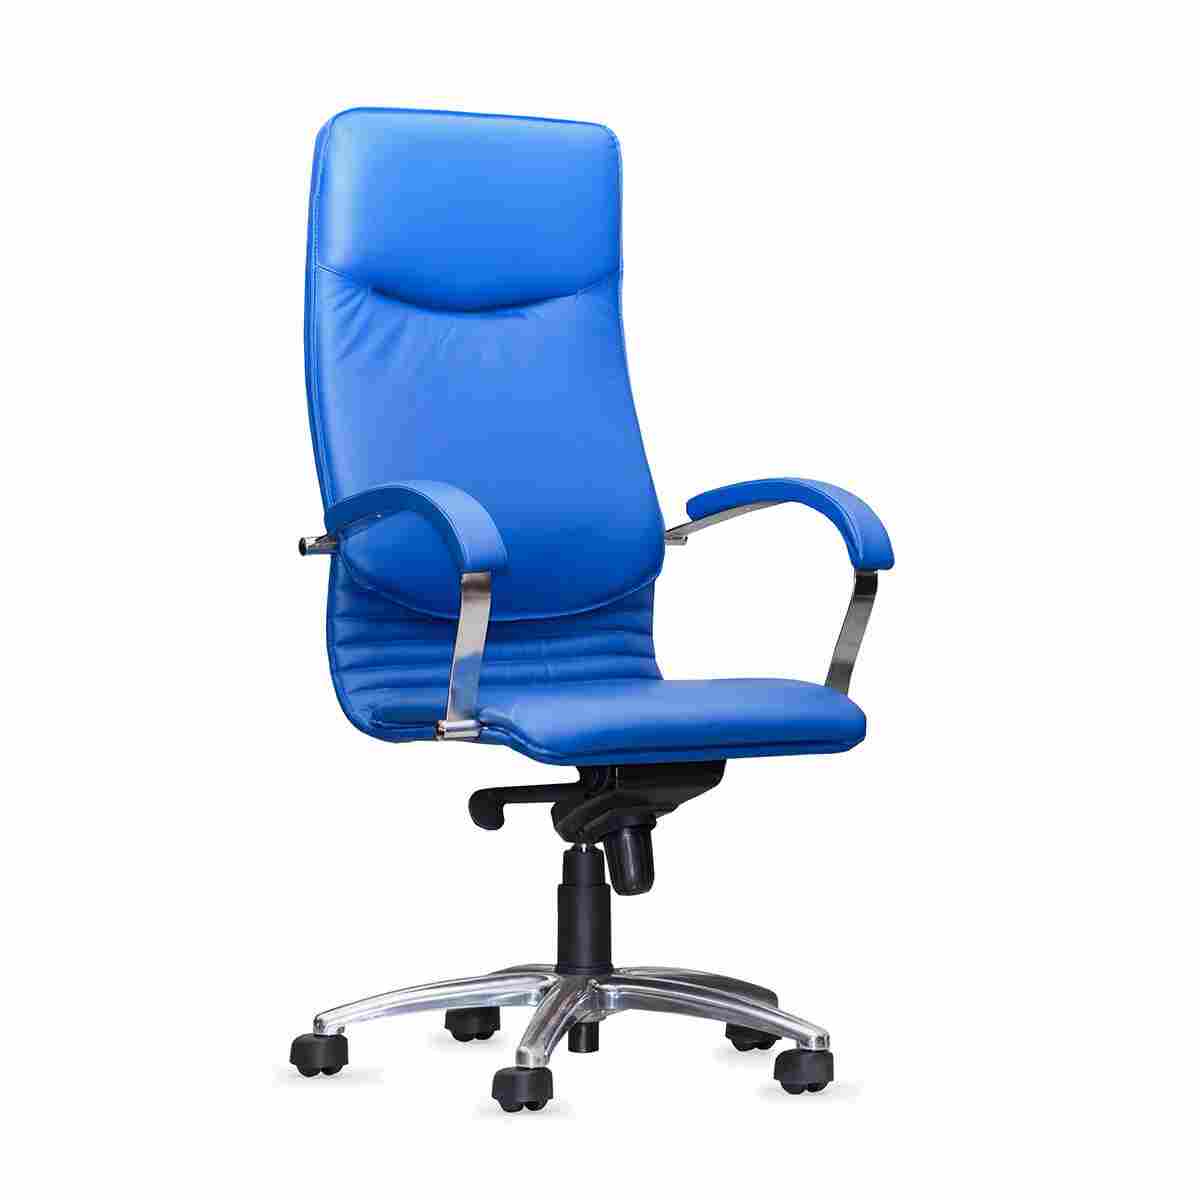 Blue leather office chair HEMED